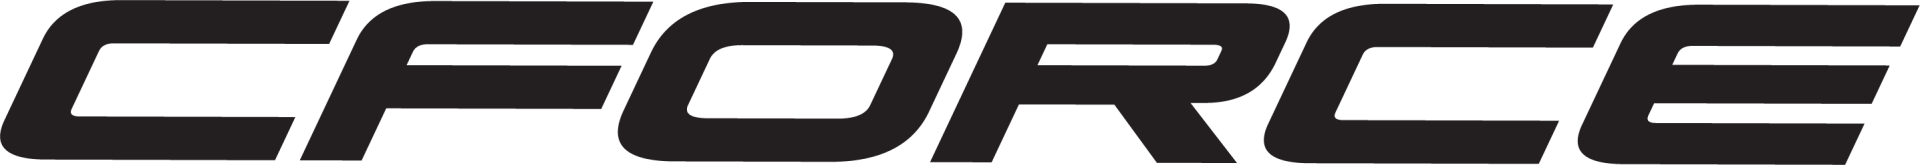 CFORCE 1000 Logo